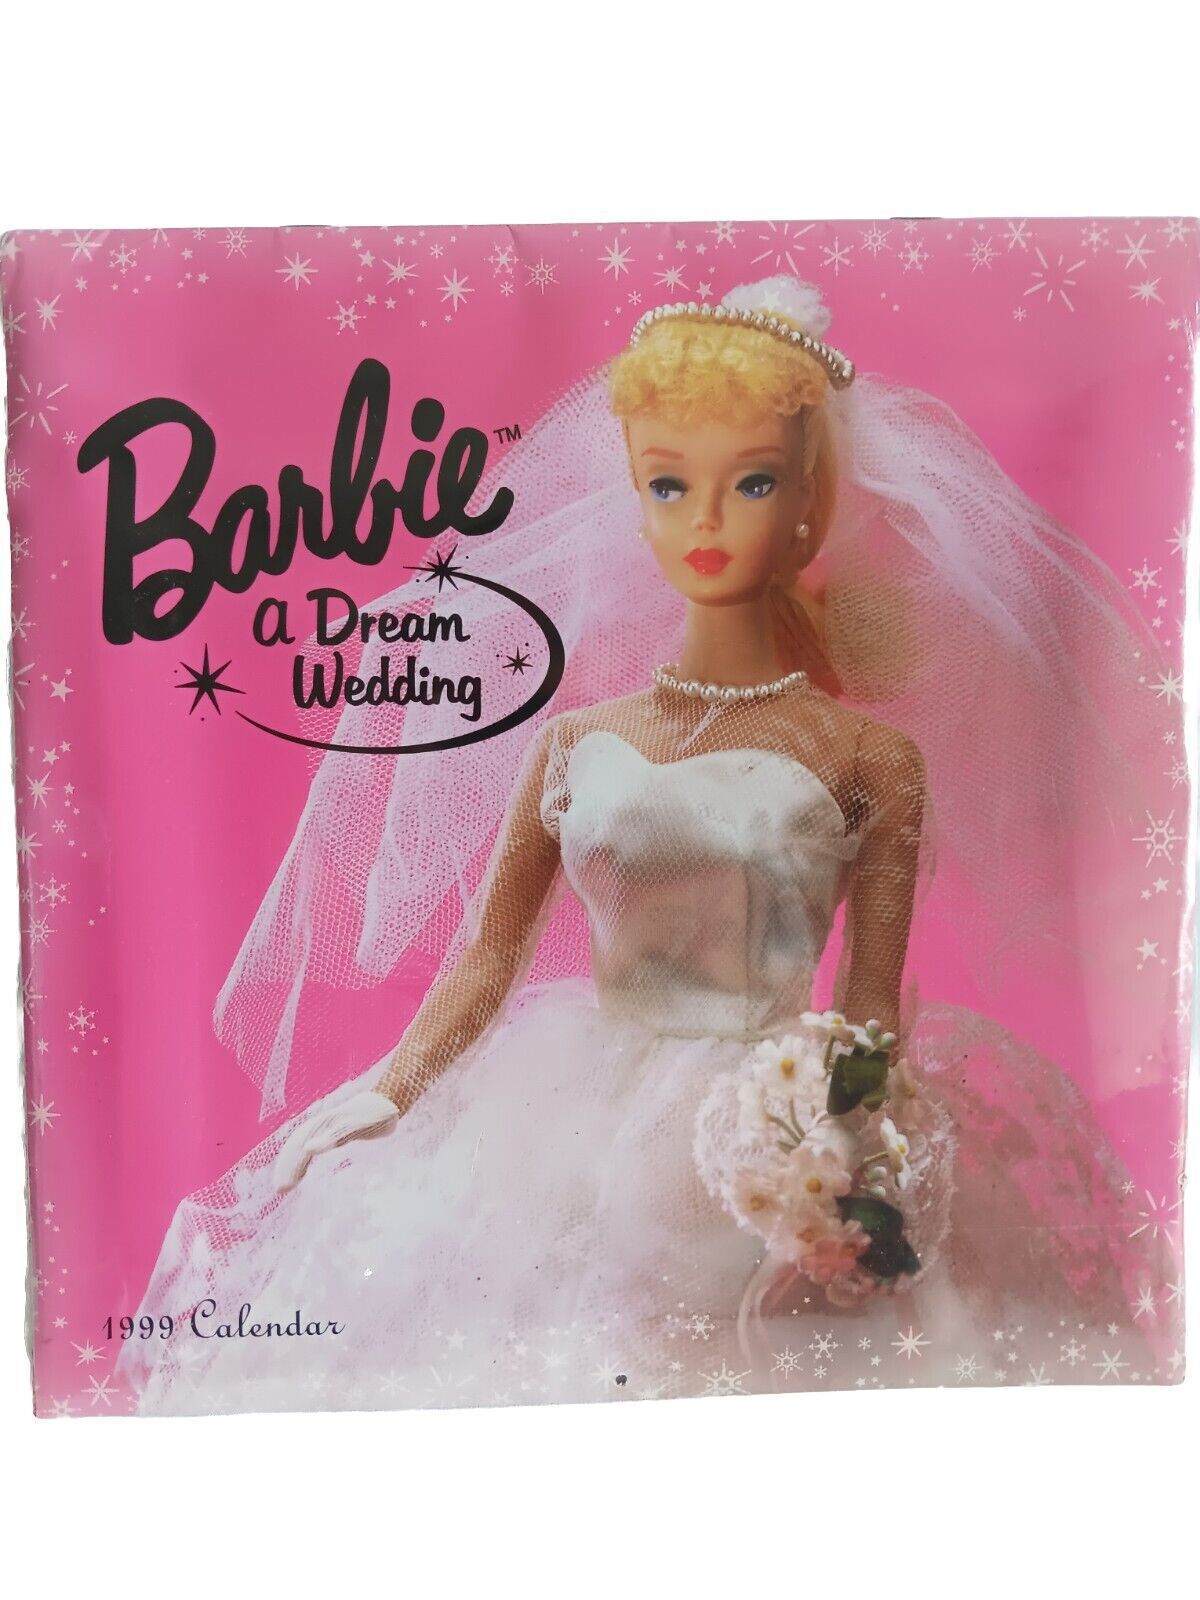 Barbie A Dream Wedding 1998 Calendar Hallmark Vintage Calendar Lot 2001, 2010